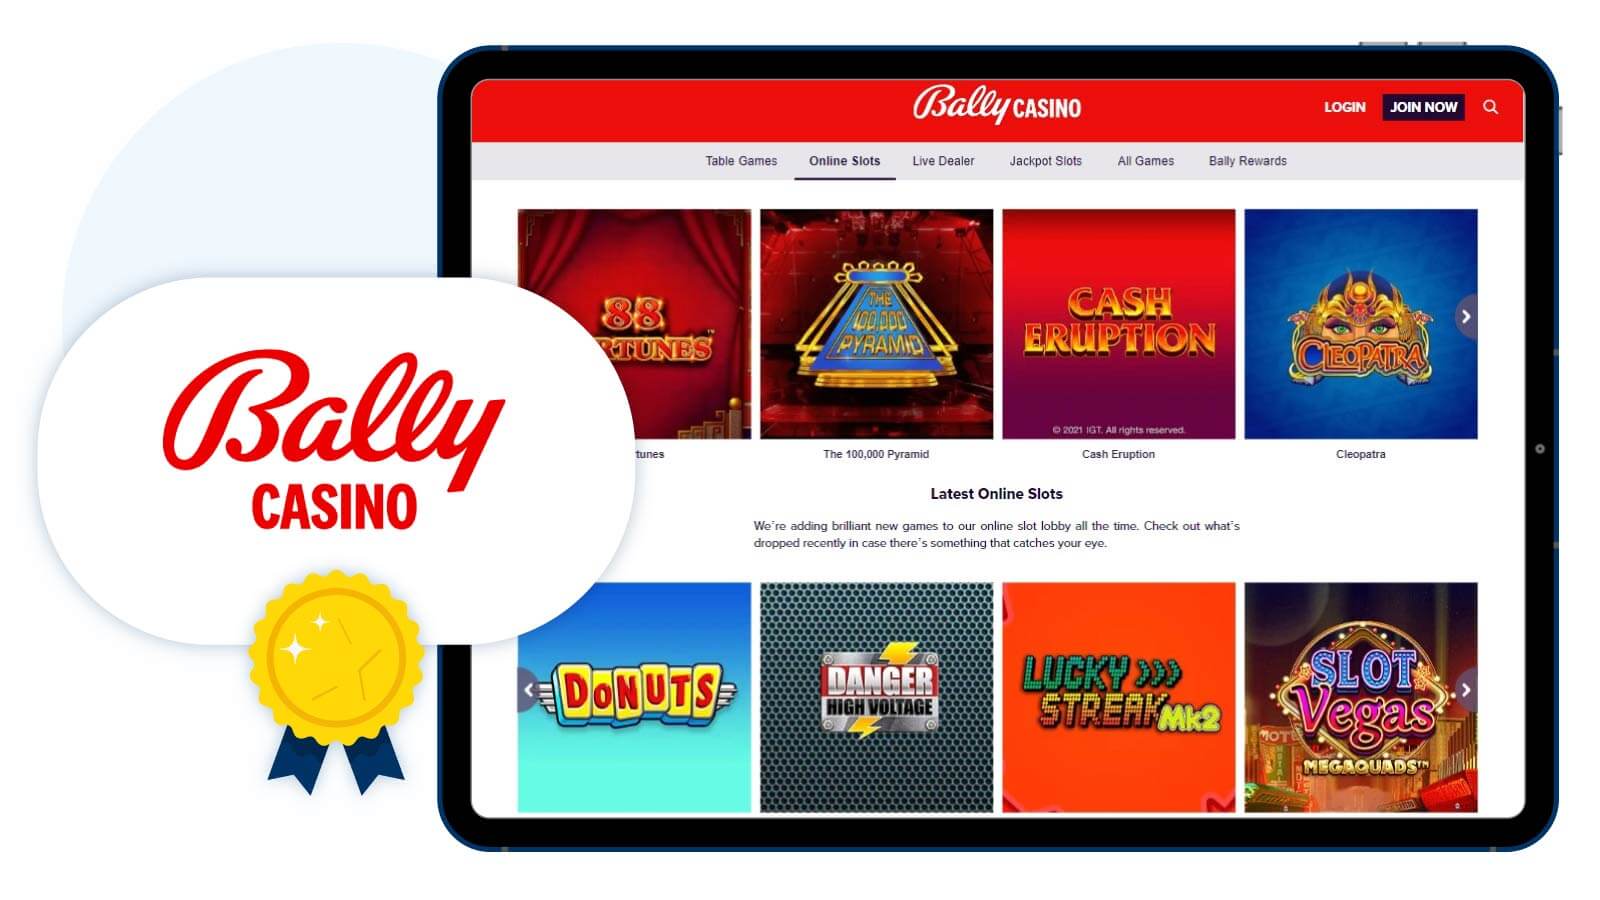 Bally Casino - The Best NetEnt Casino in UK for April